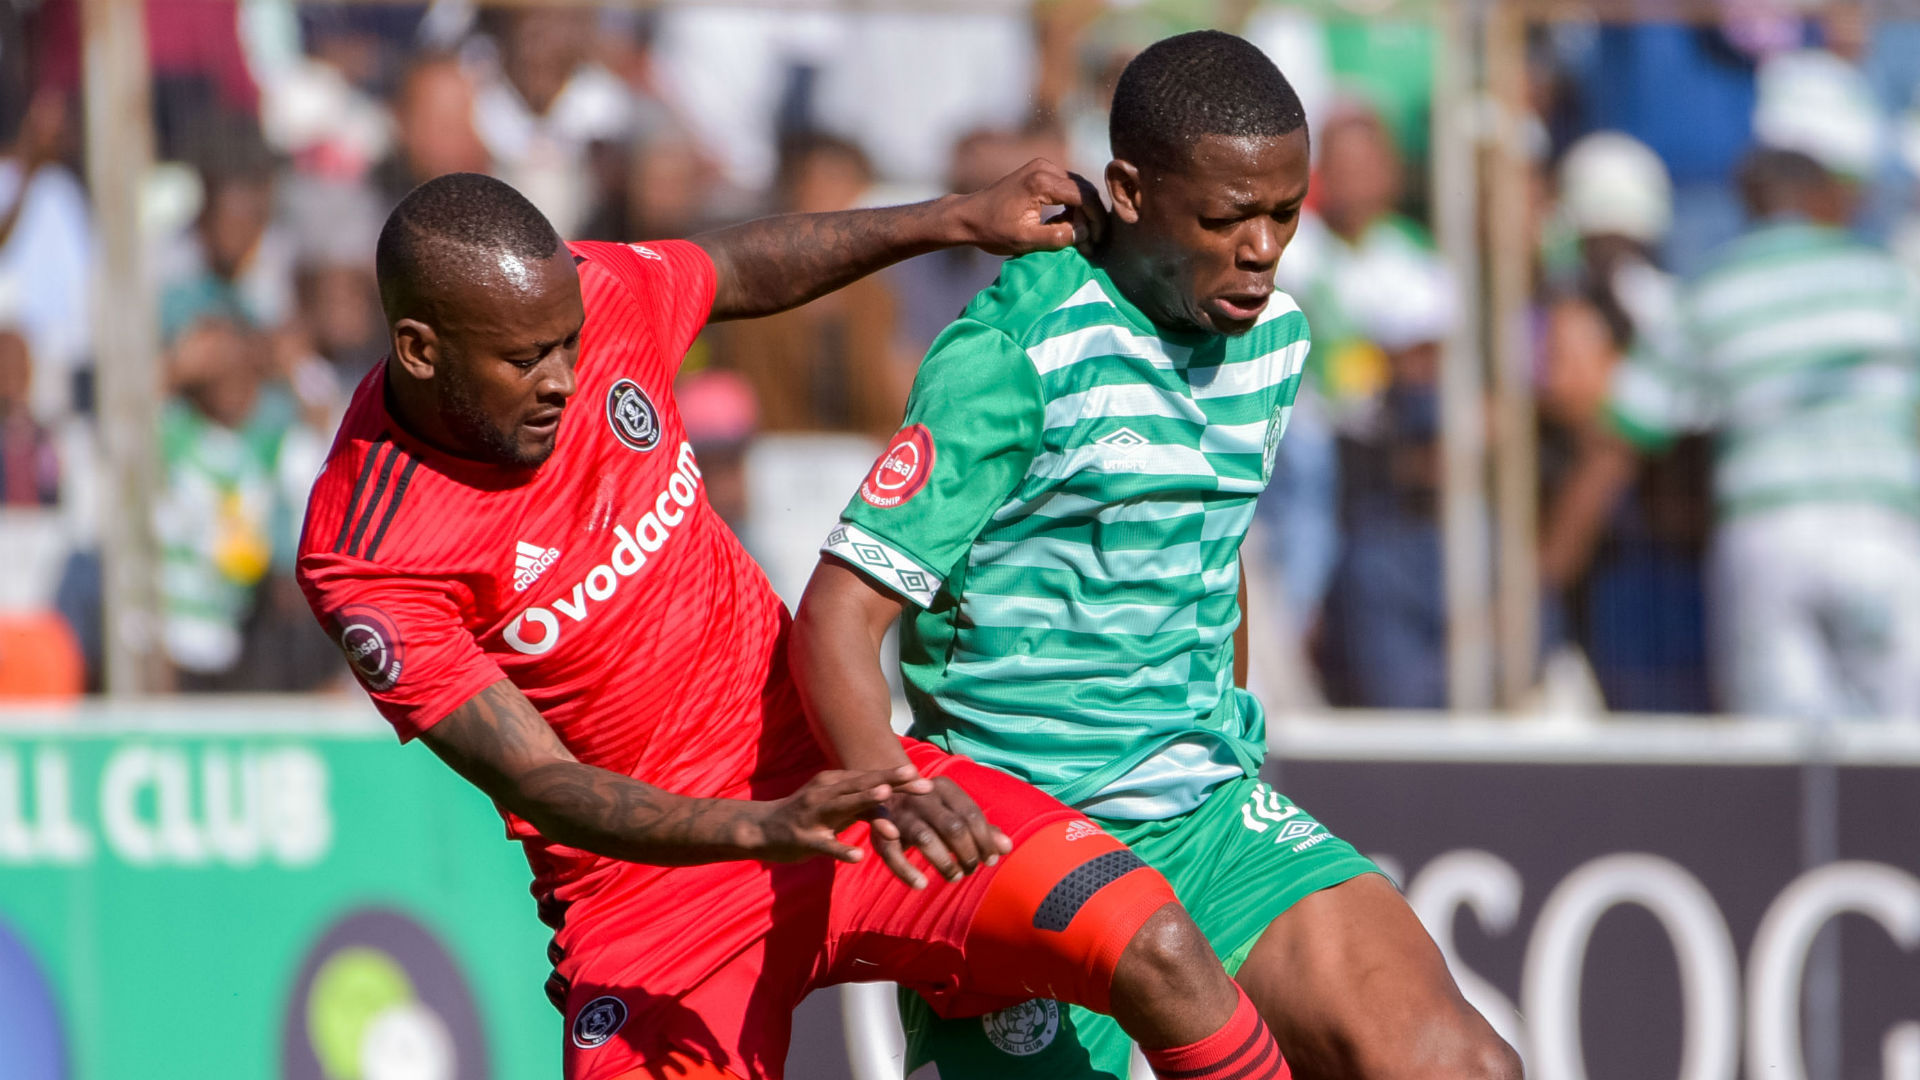 Bloemfontein Celtic tie down former Orlando Pirates striker Ndumiso Mabena